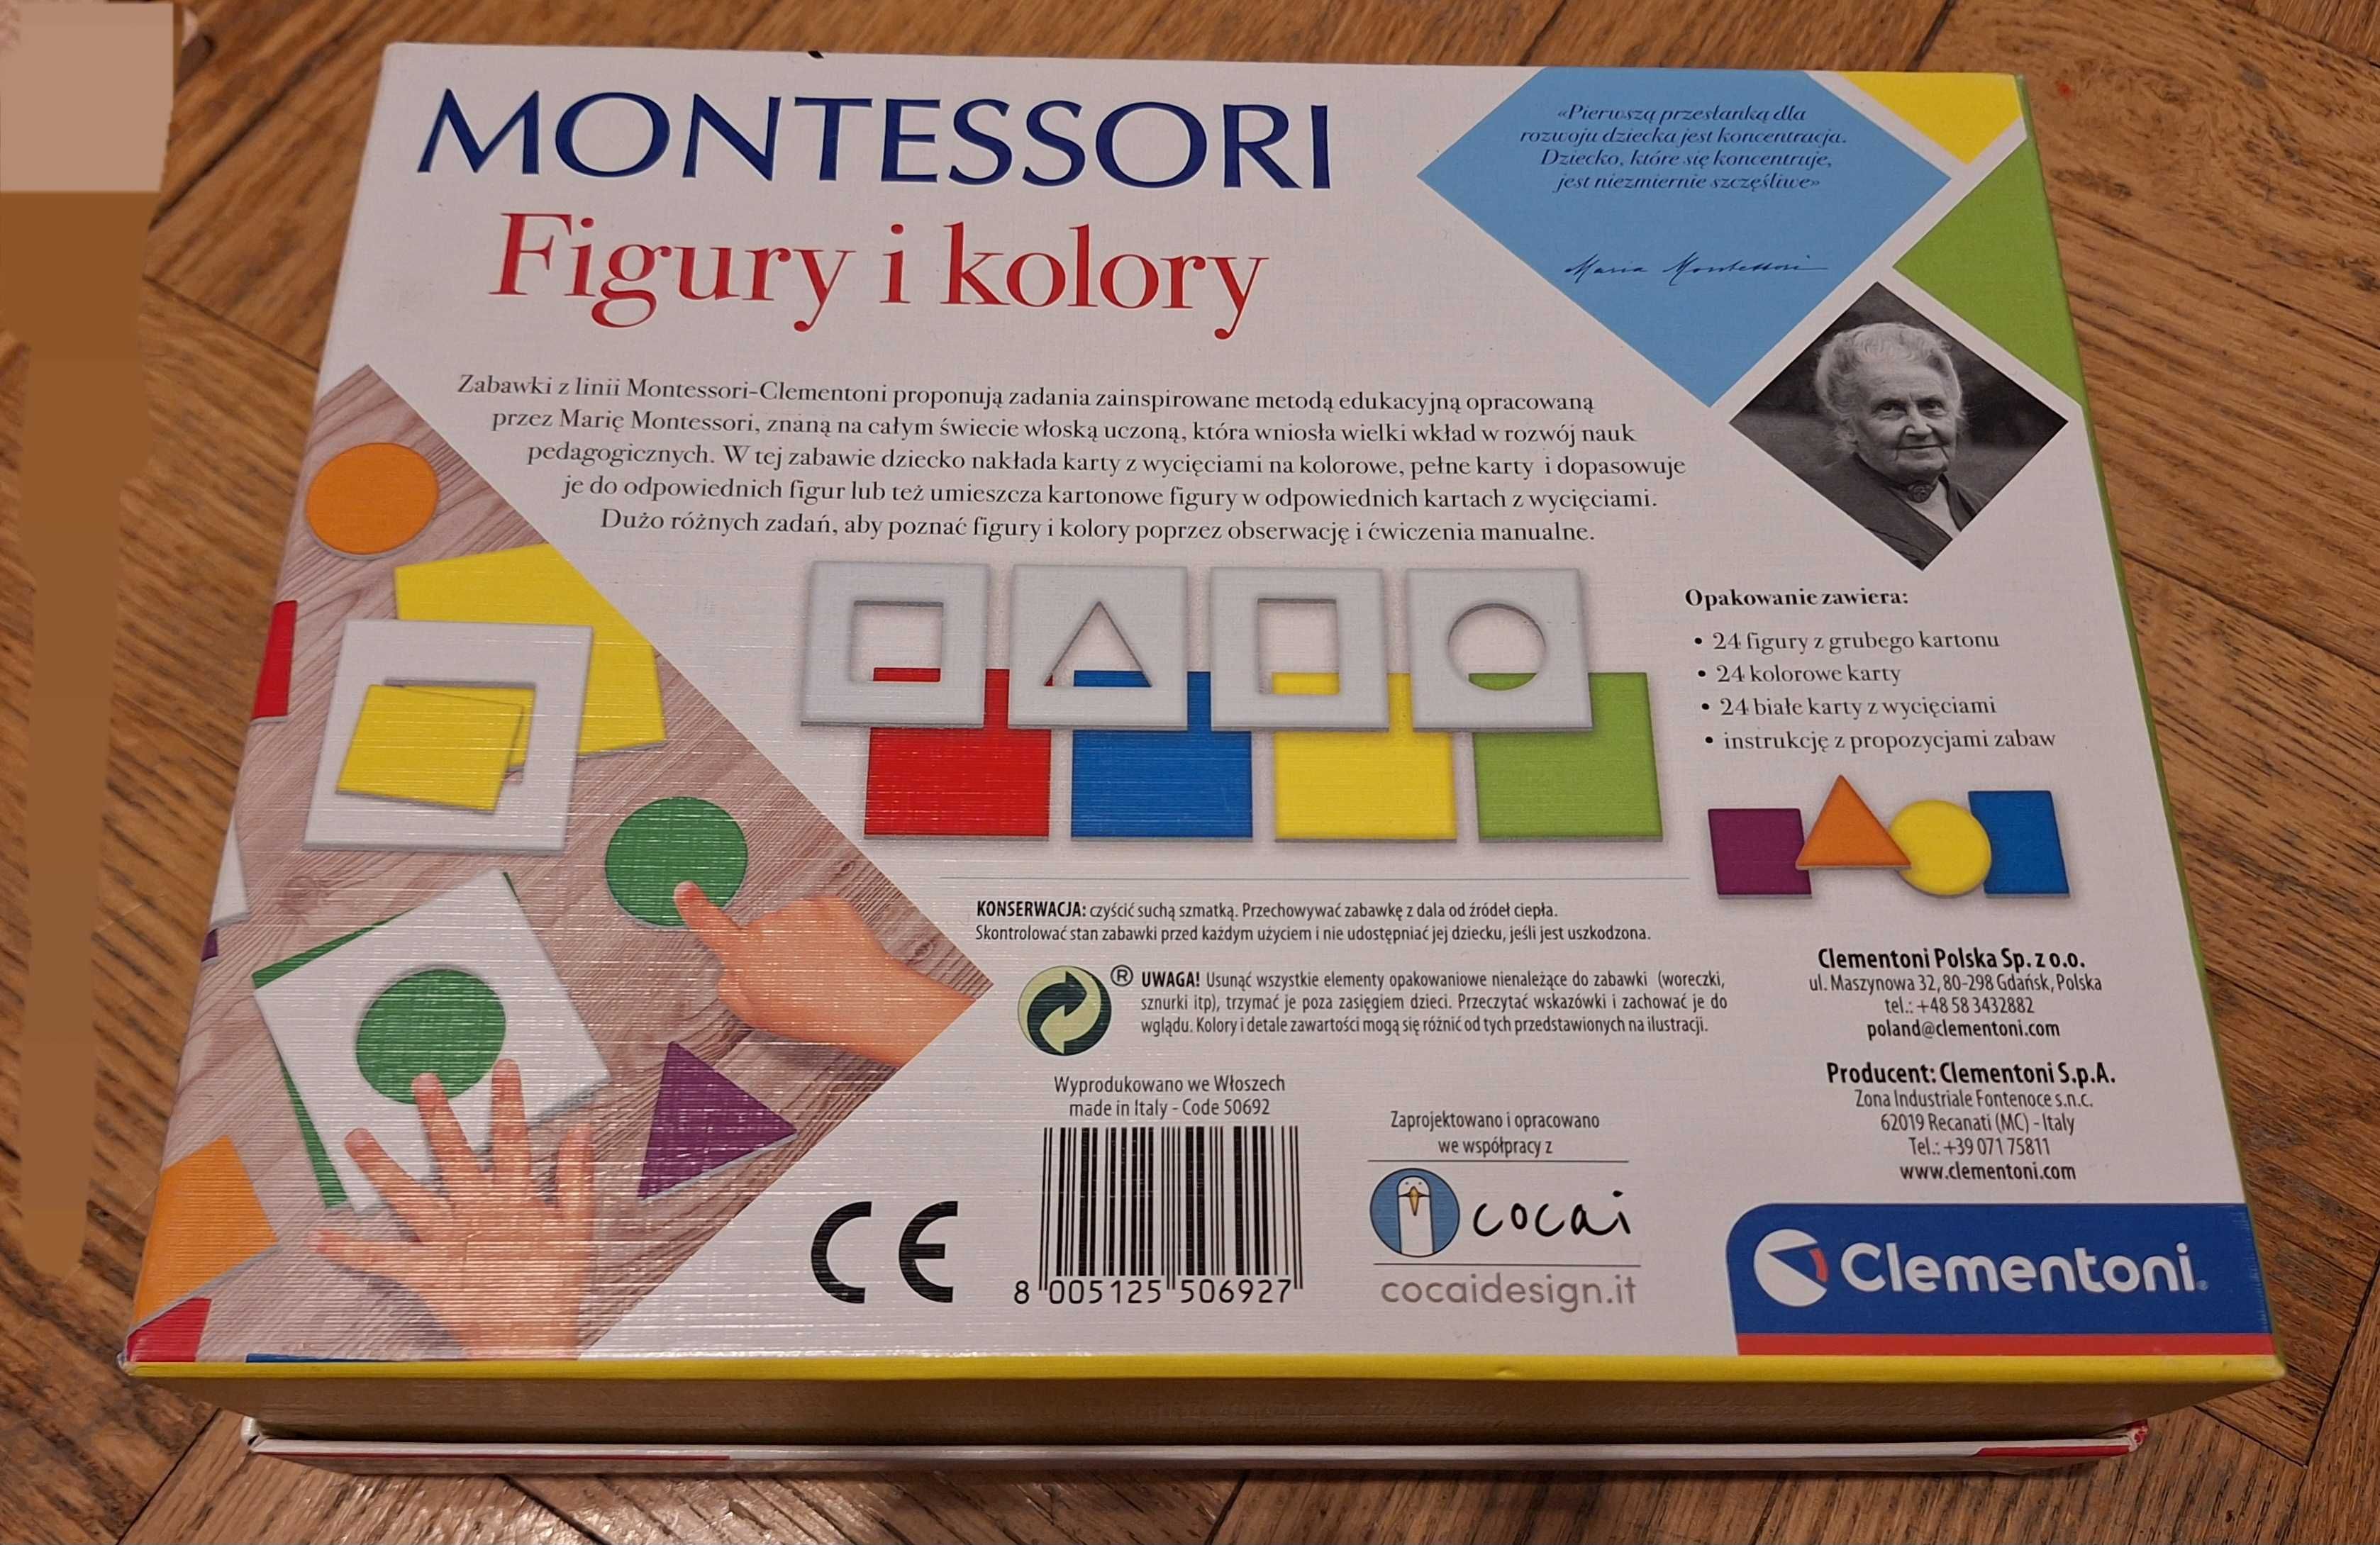 Montessori figury i kolory. Clementoni zabawka gra.